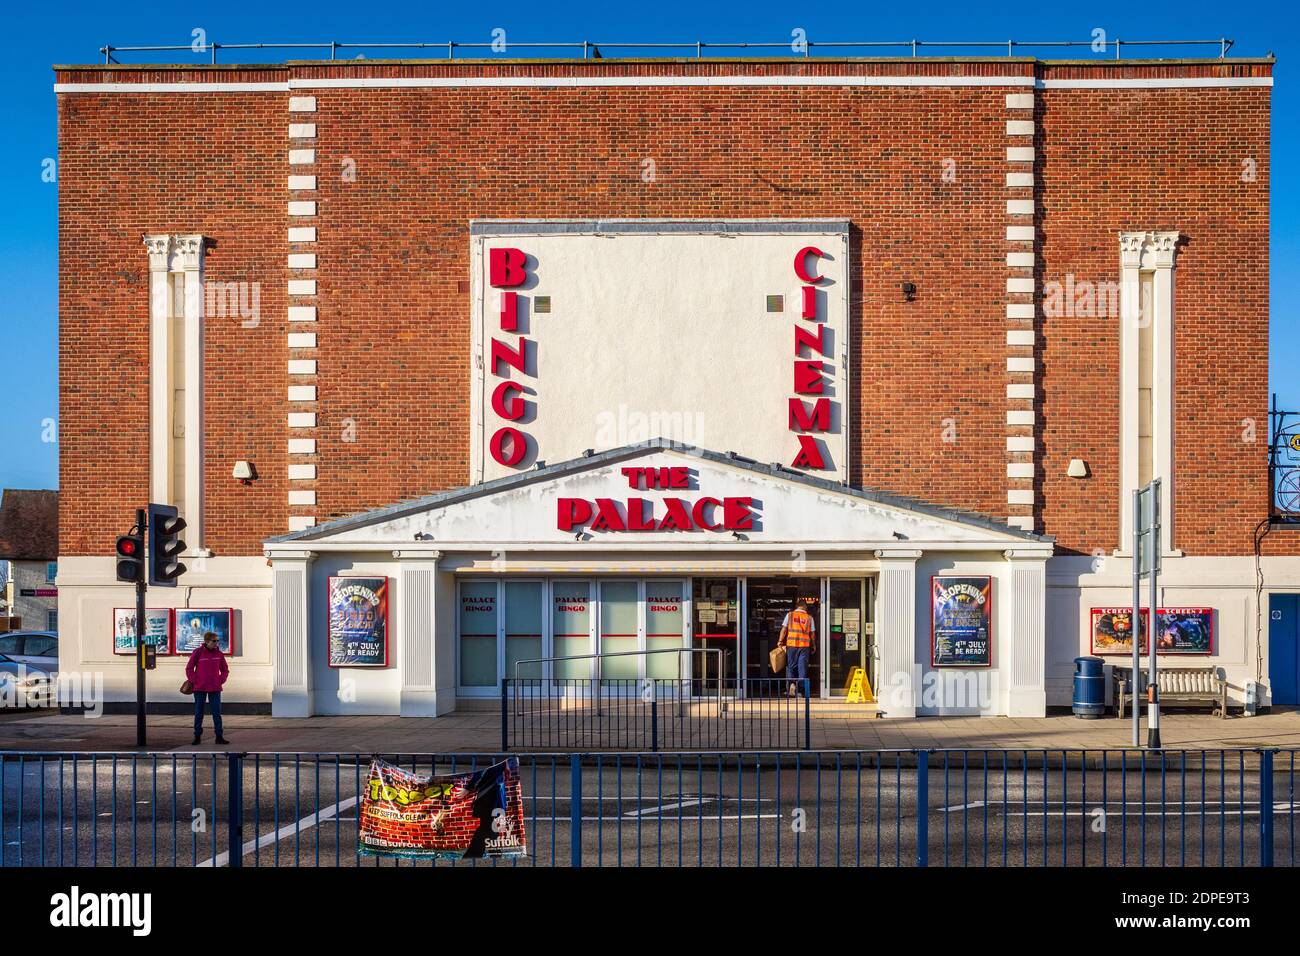 UK Bingo Hall und Kino. The Palace Bingo Hall and Cinema in Felixstowe, Suffolk, Großbritannien. Eröffnet 1937. Stockfoto